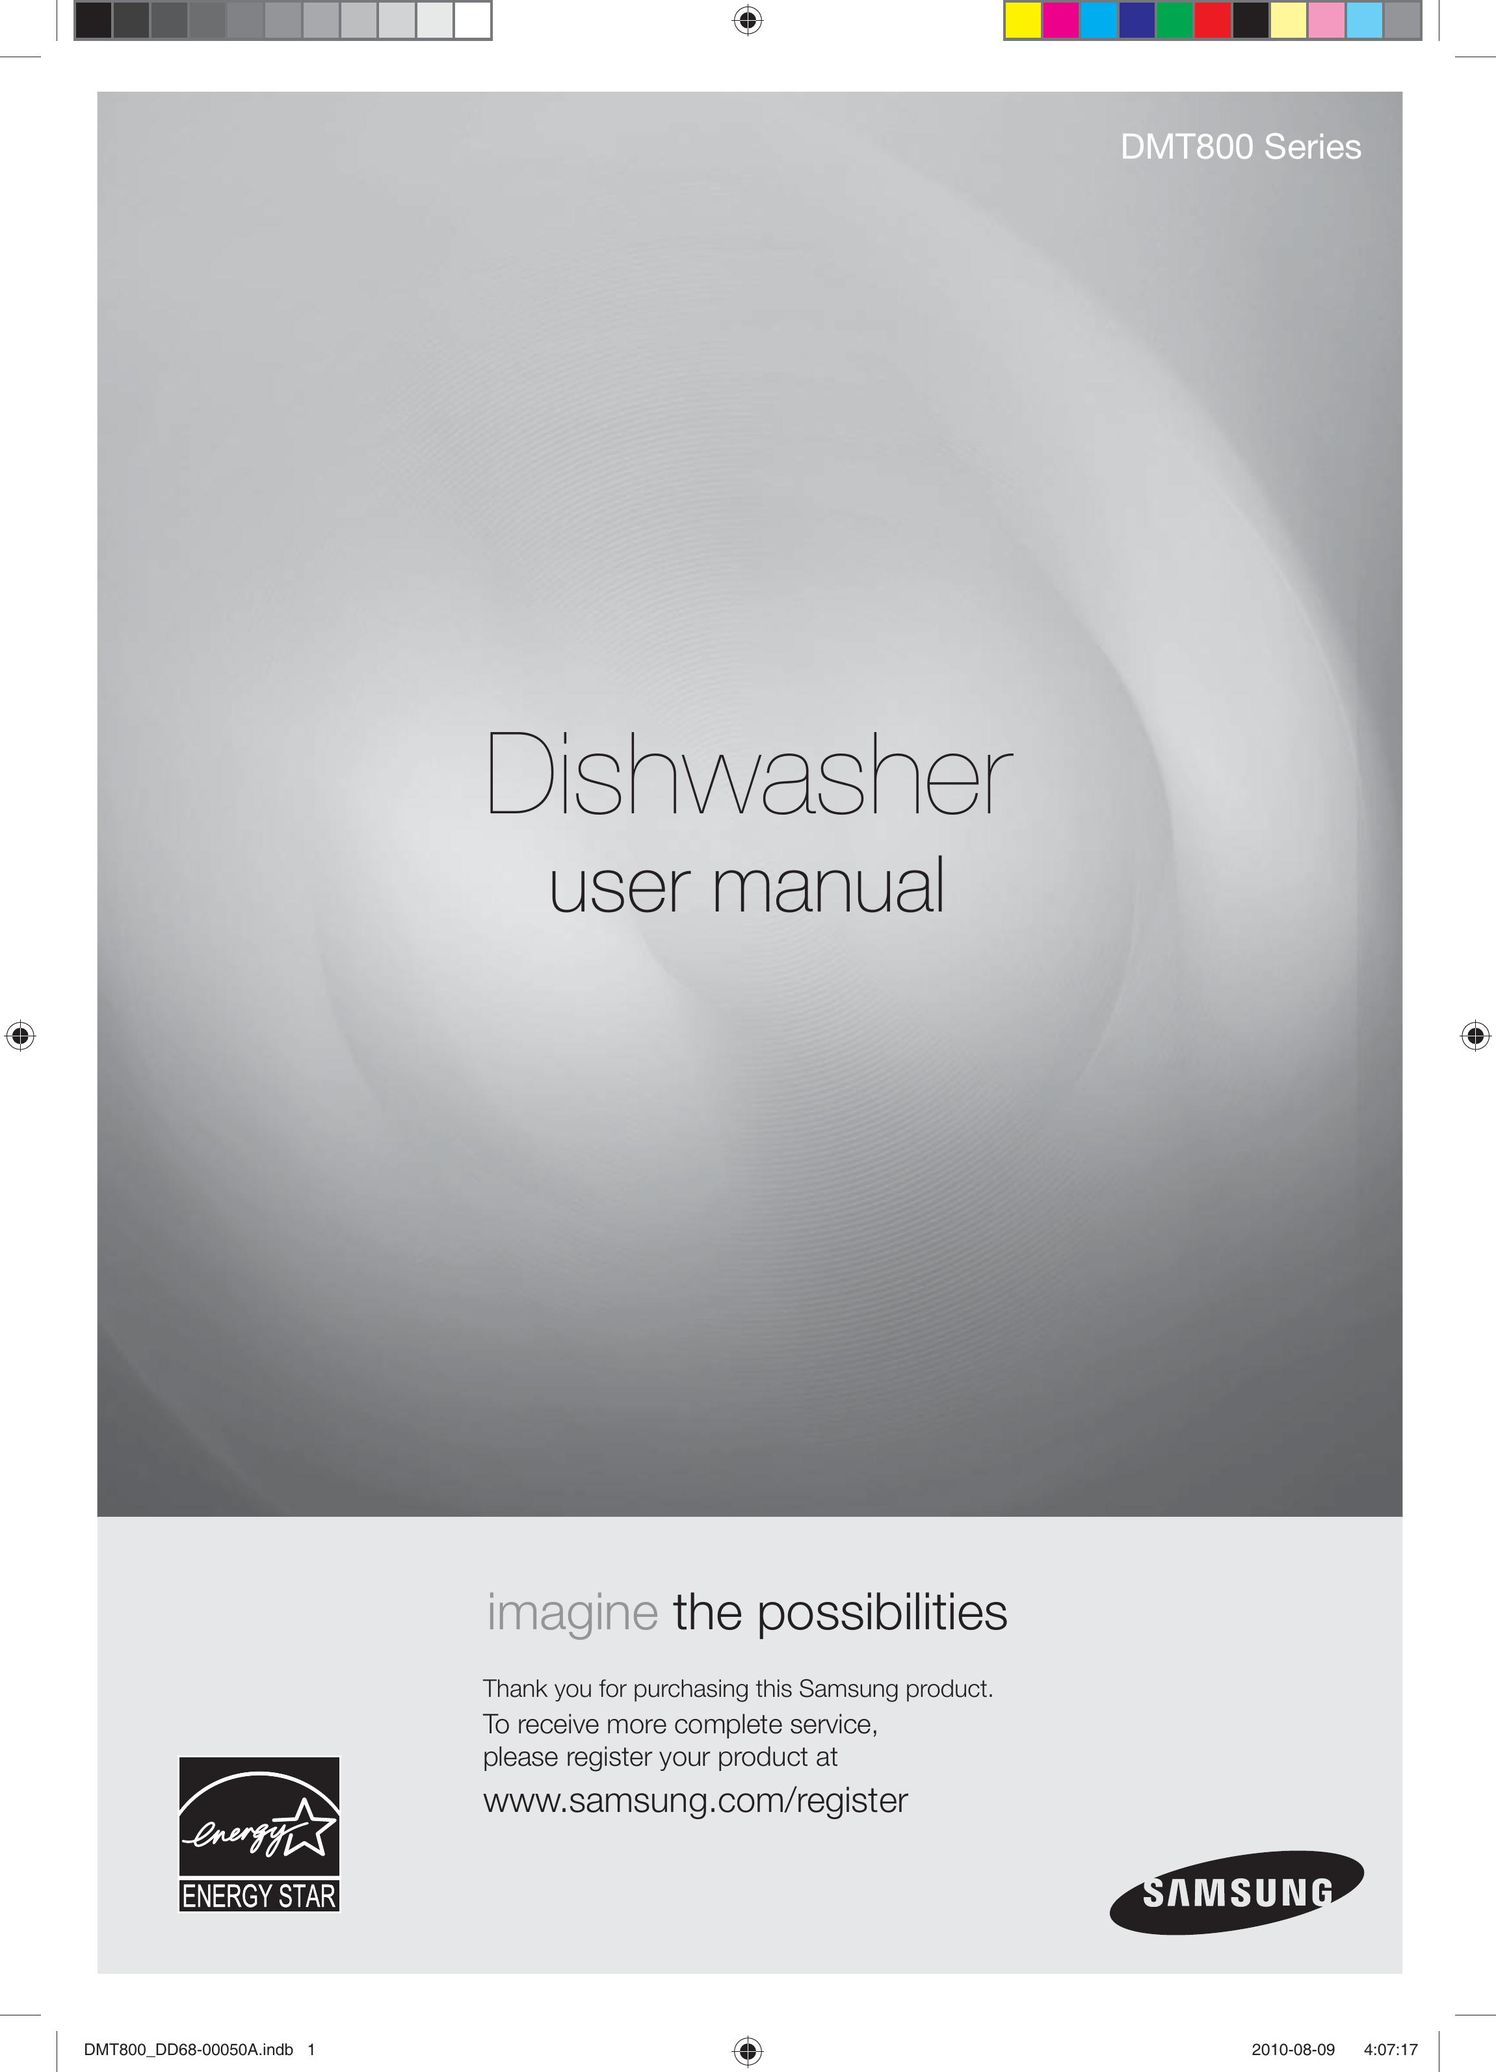 Samsung DMT800RHW Dishwasher User Manual